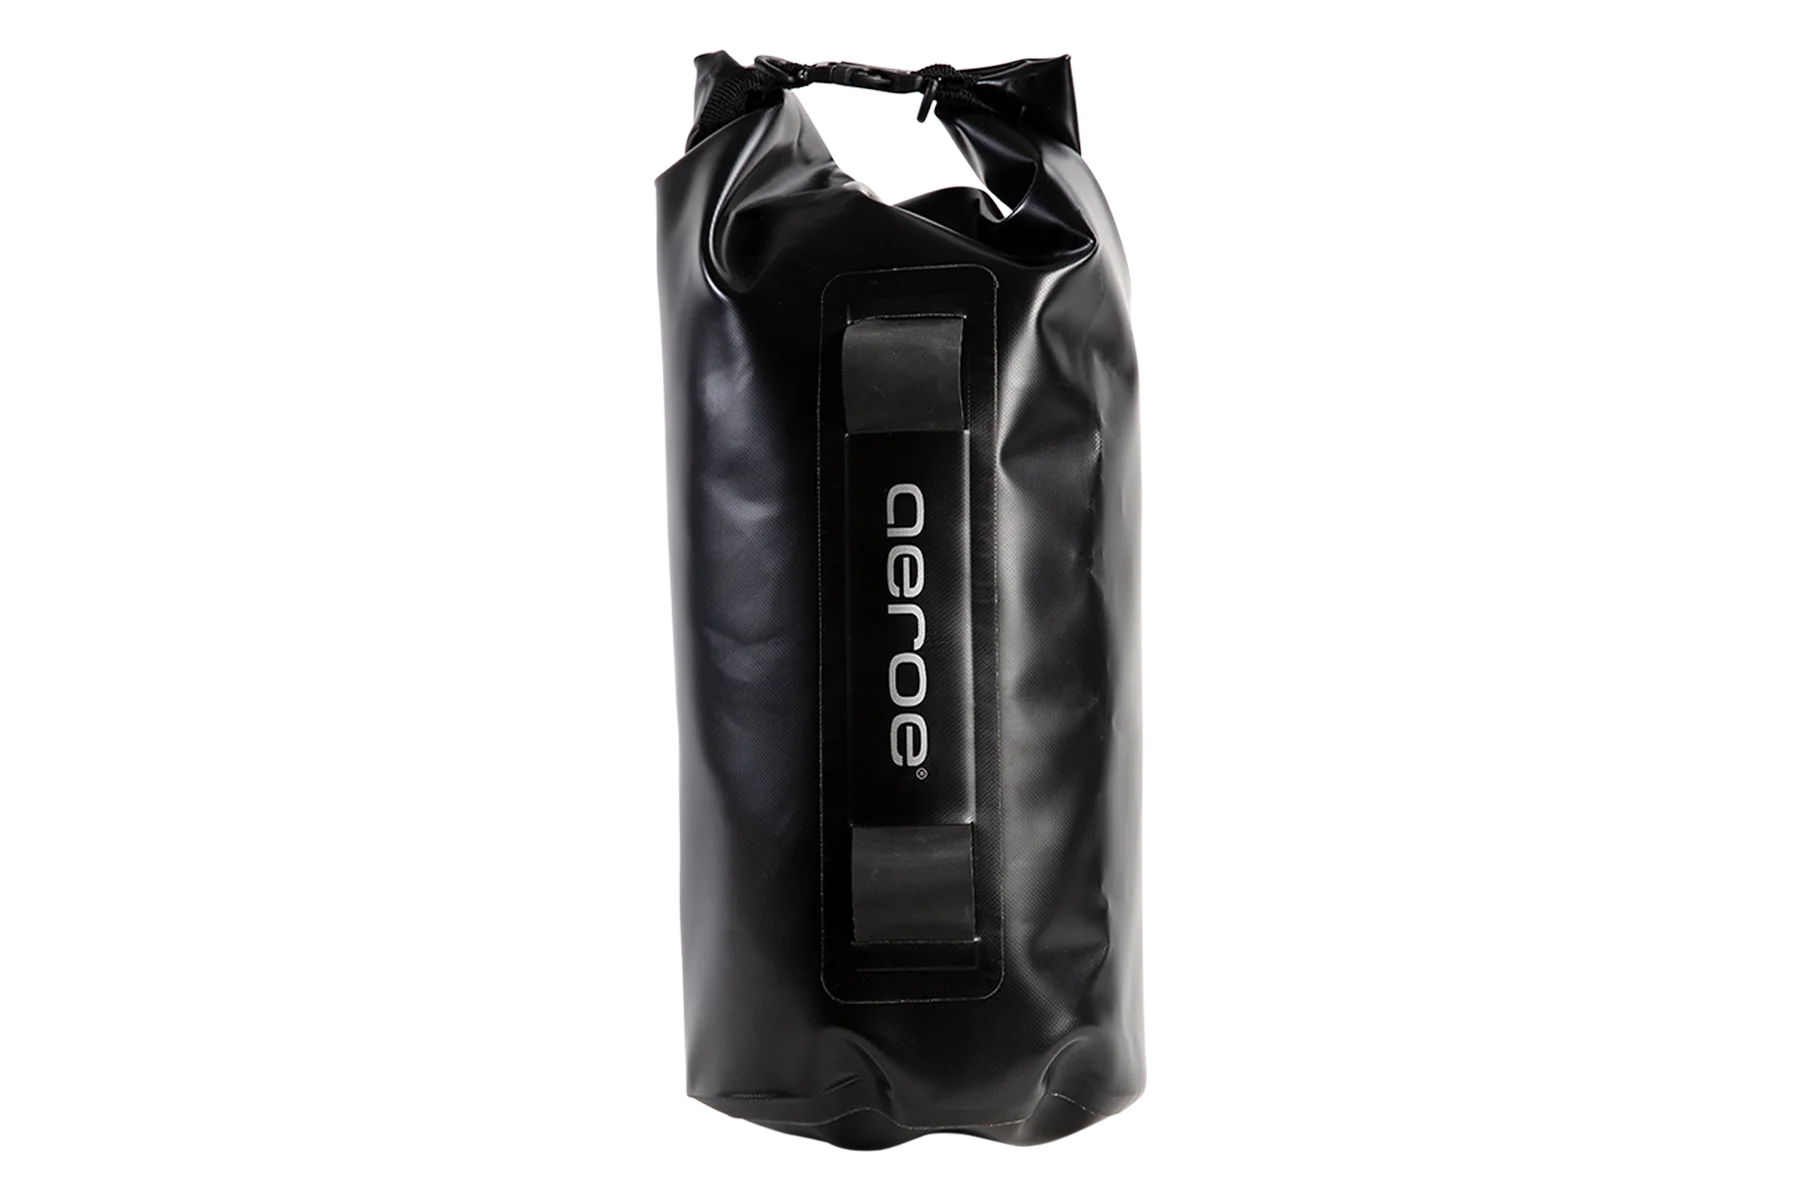 Aeroe Heavy Duty Dry Bag - 12 Liter (Black)